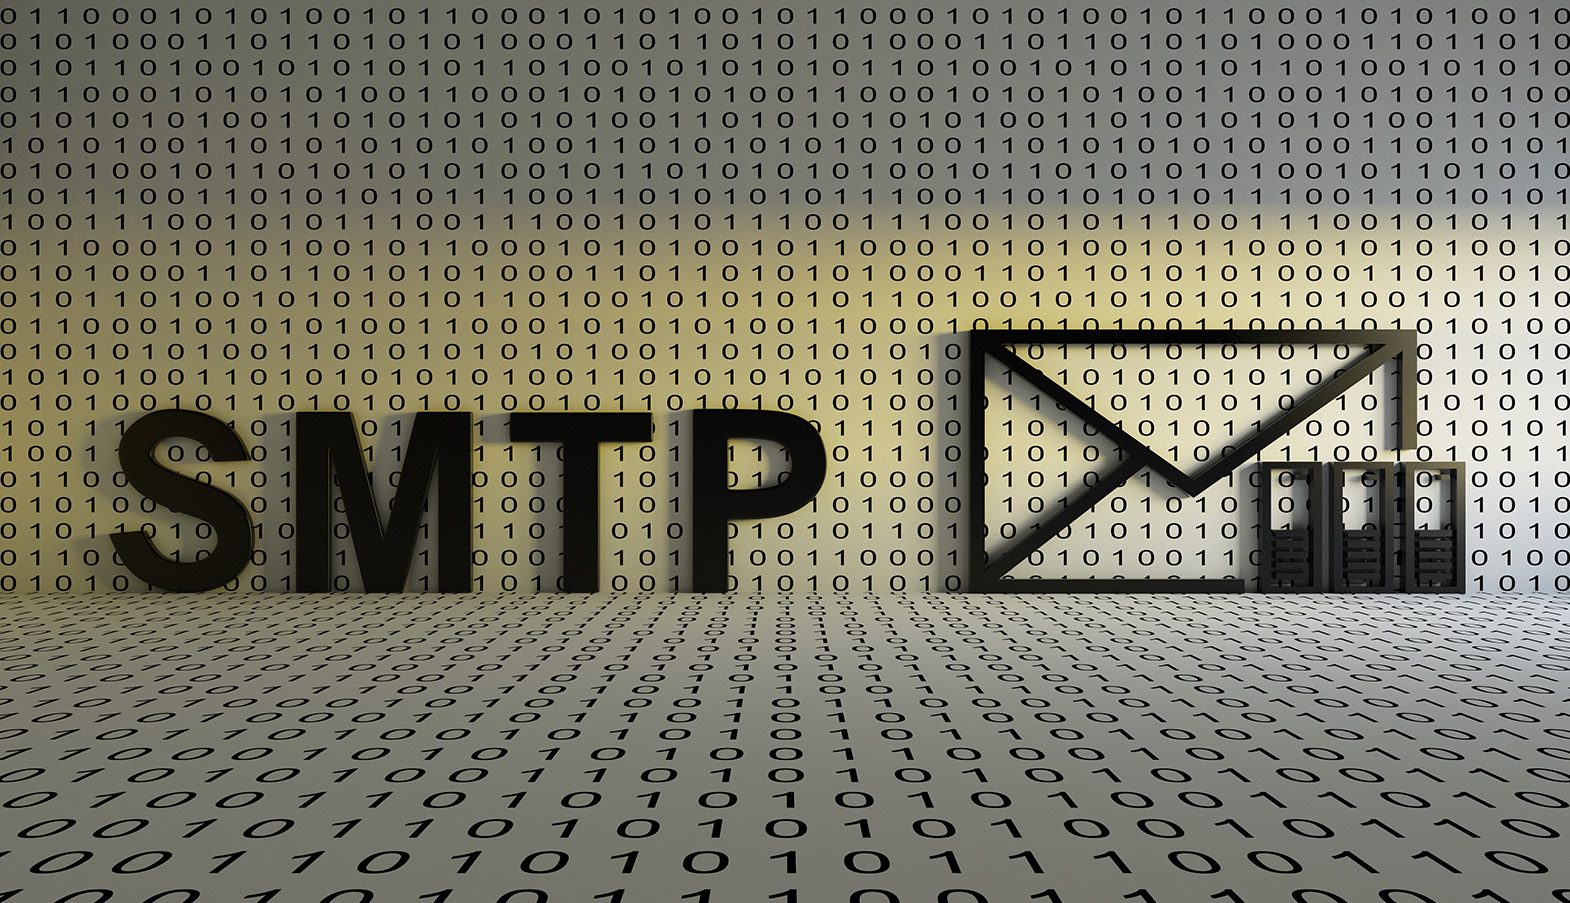 SMTP blog